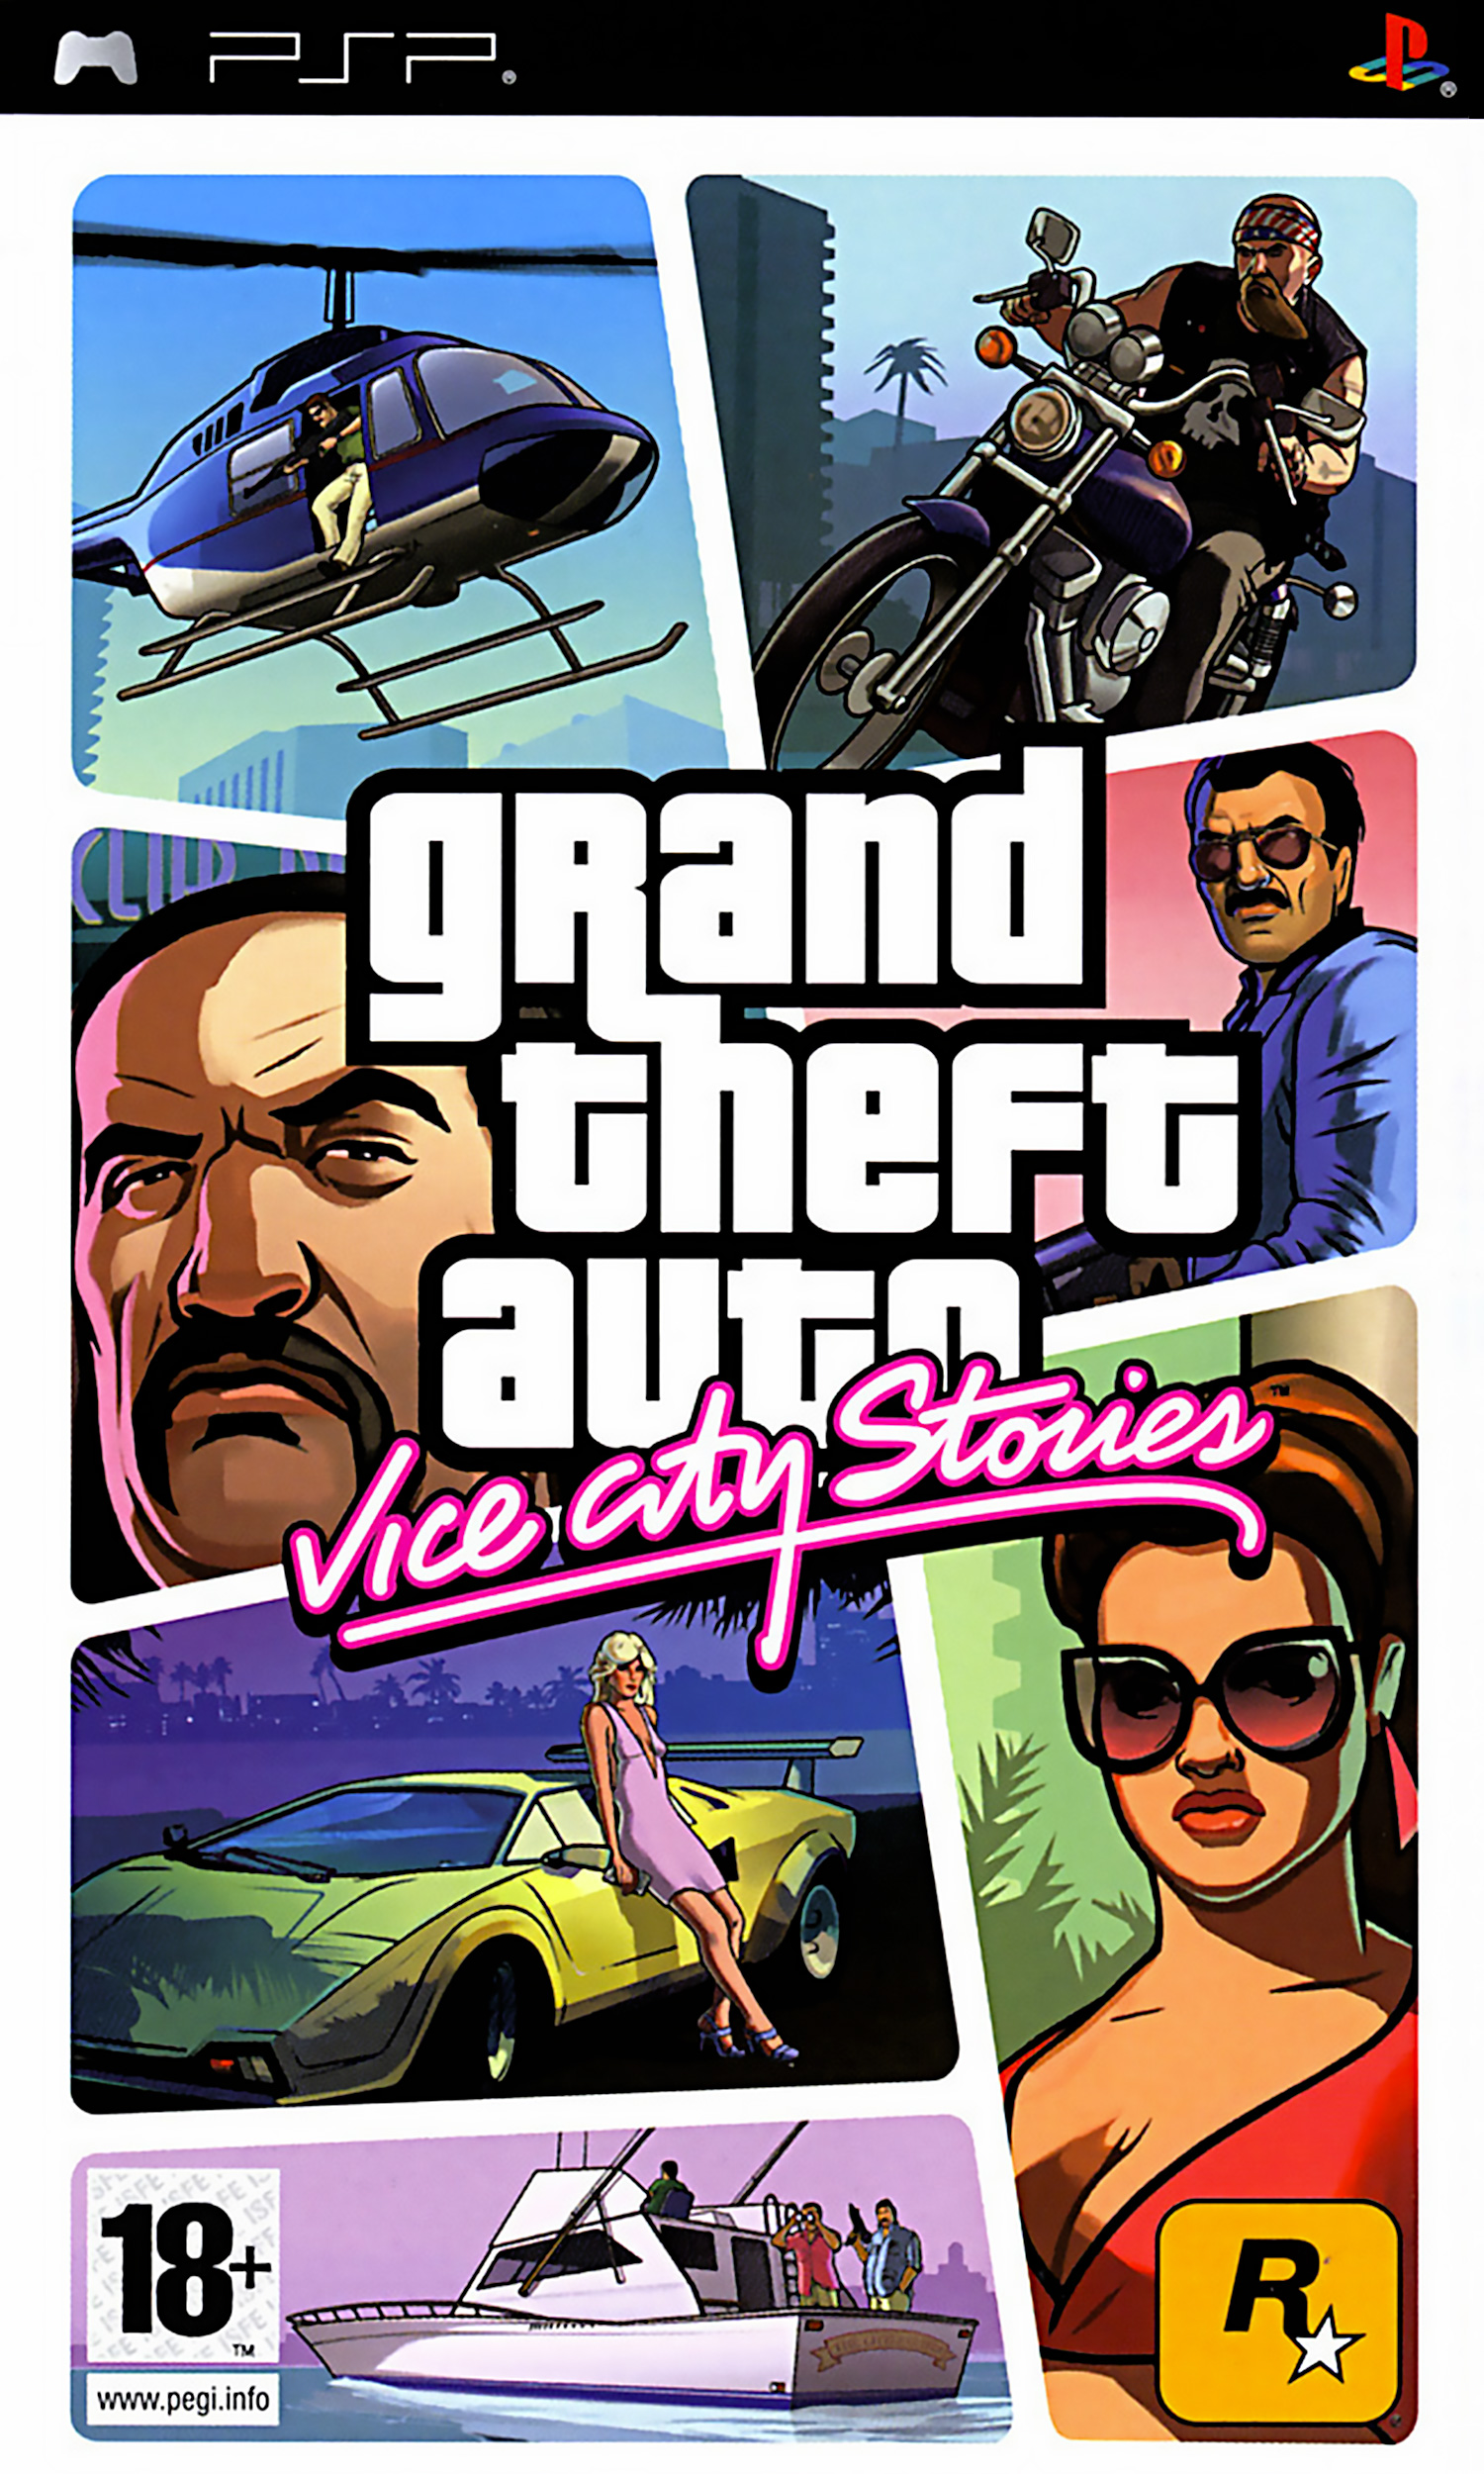 gta vice city stories game